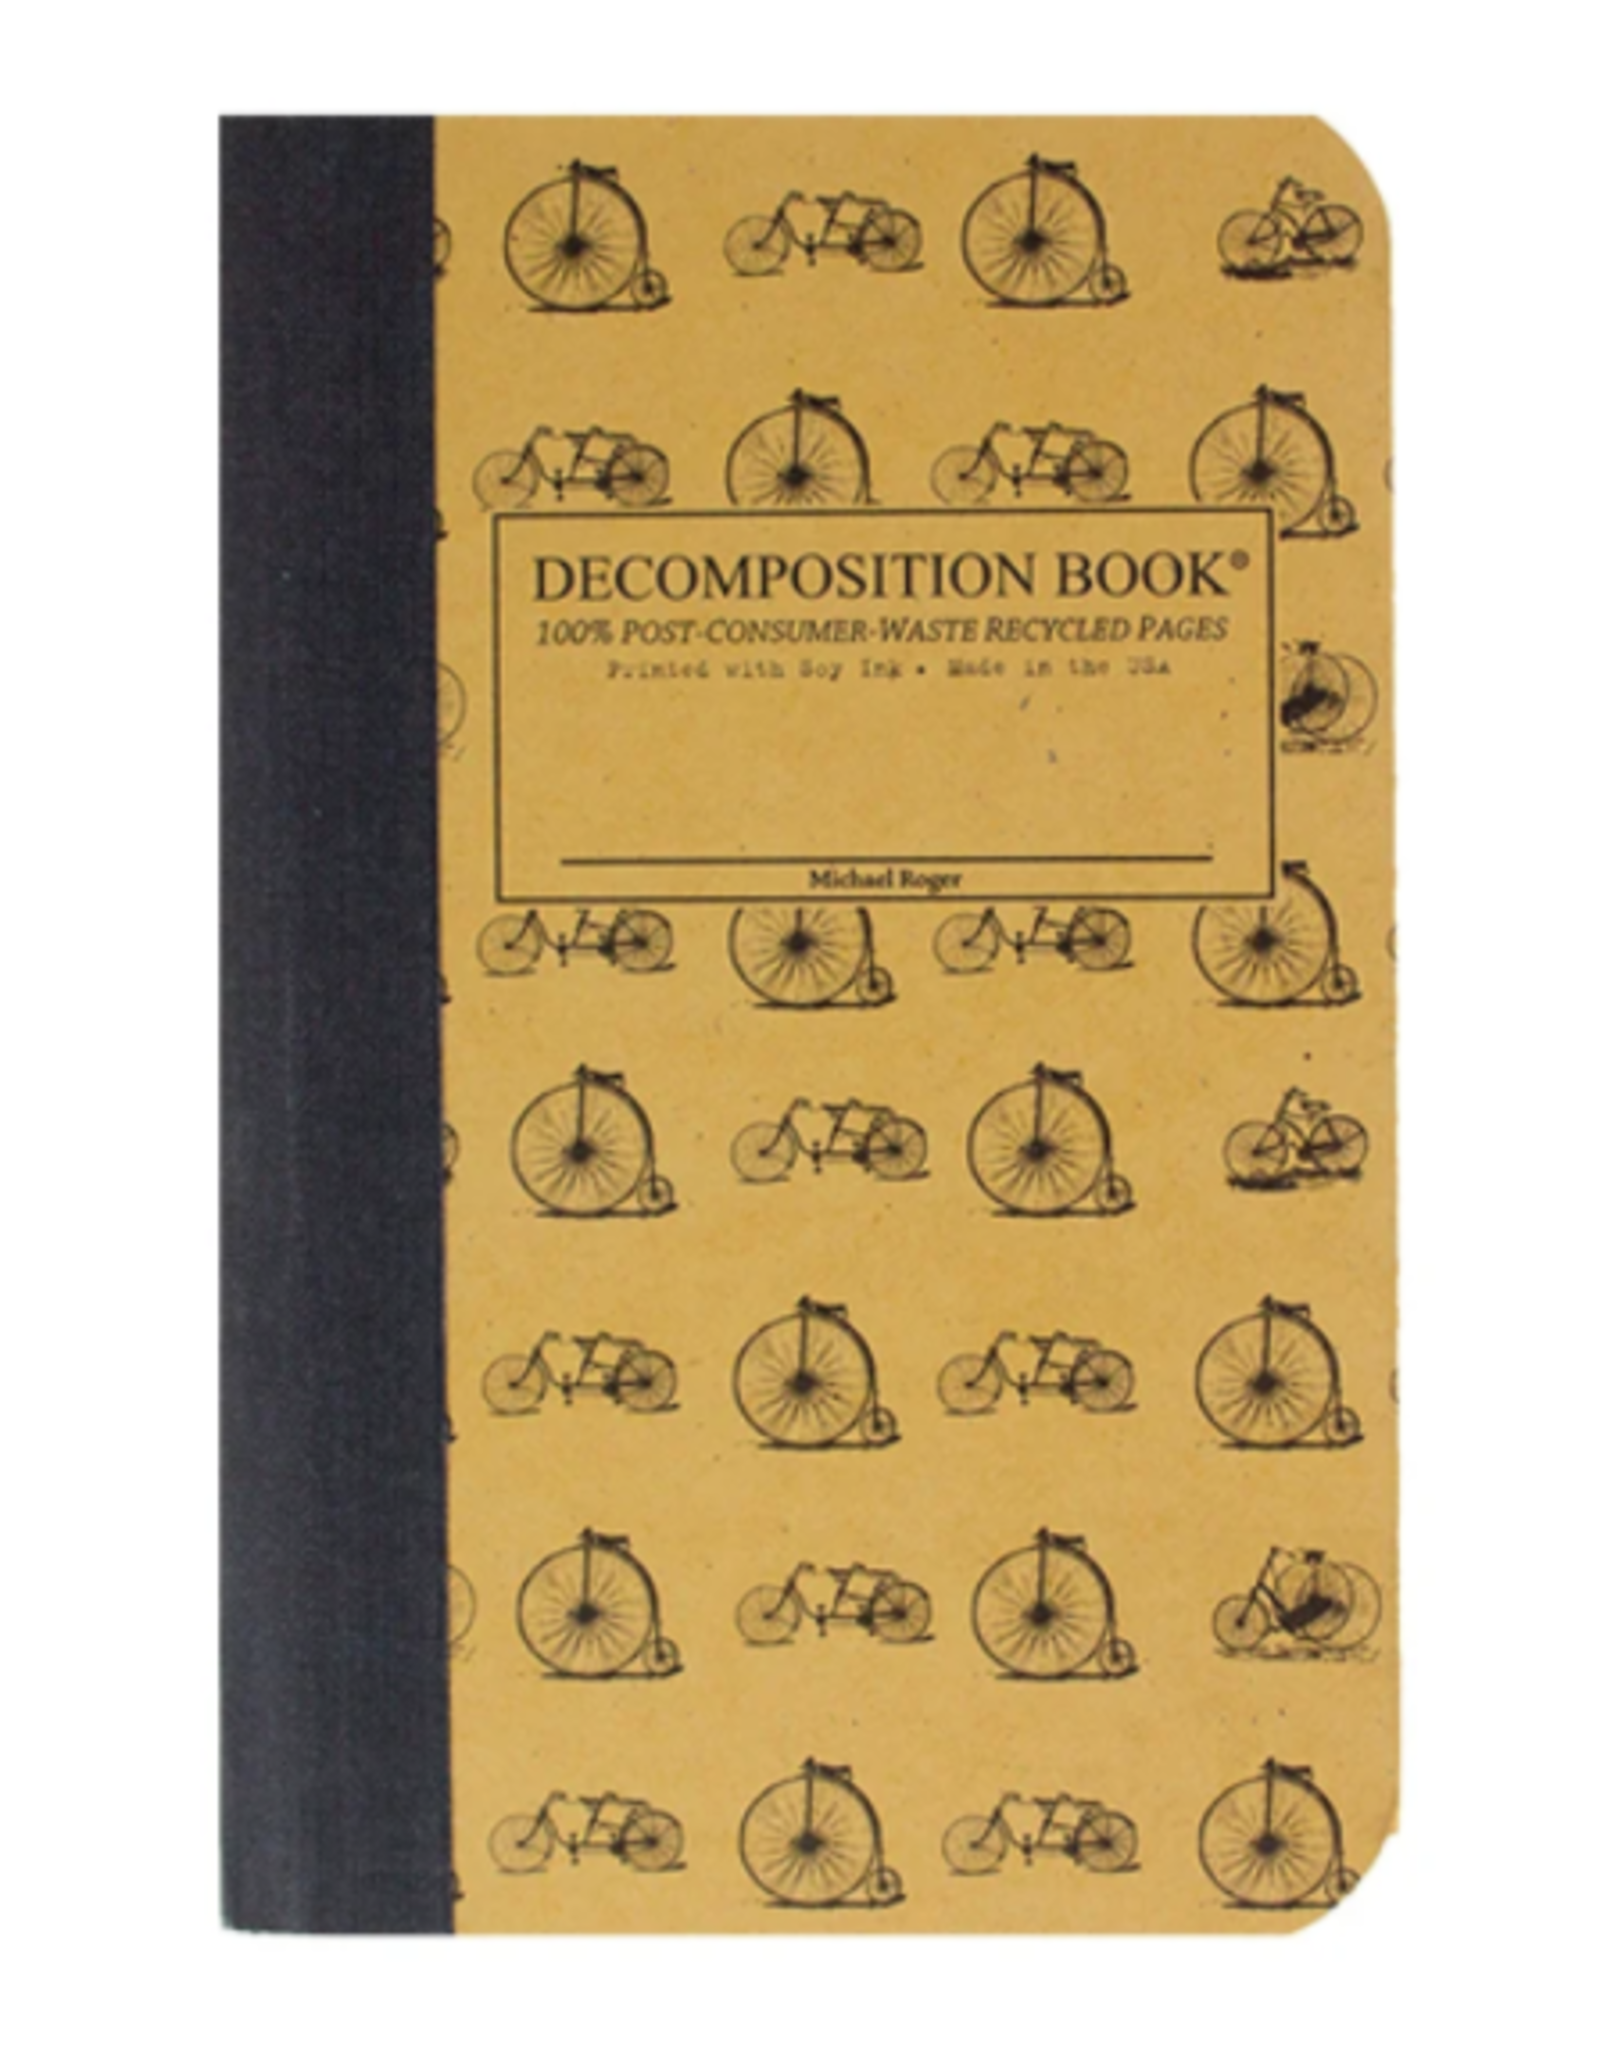 Michael Roger Press Decomposition Book 4x6"